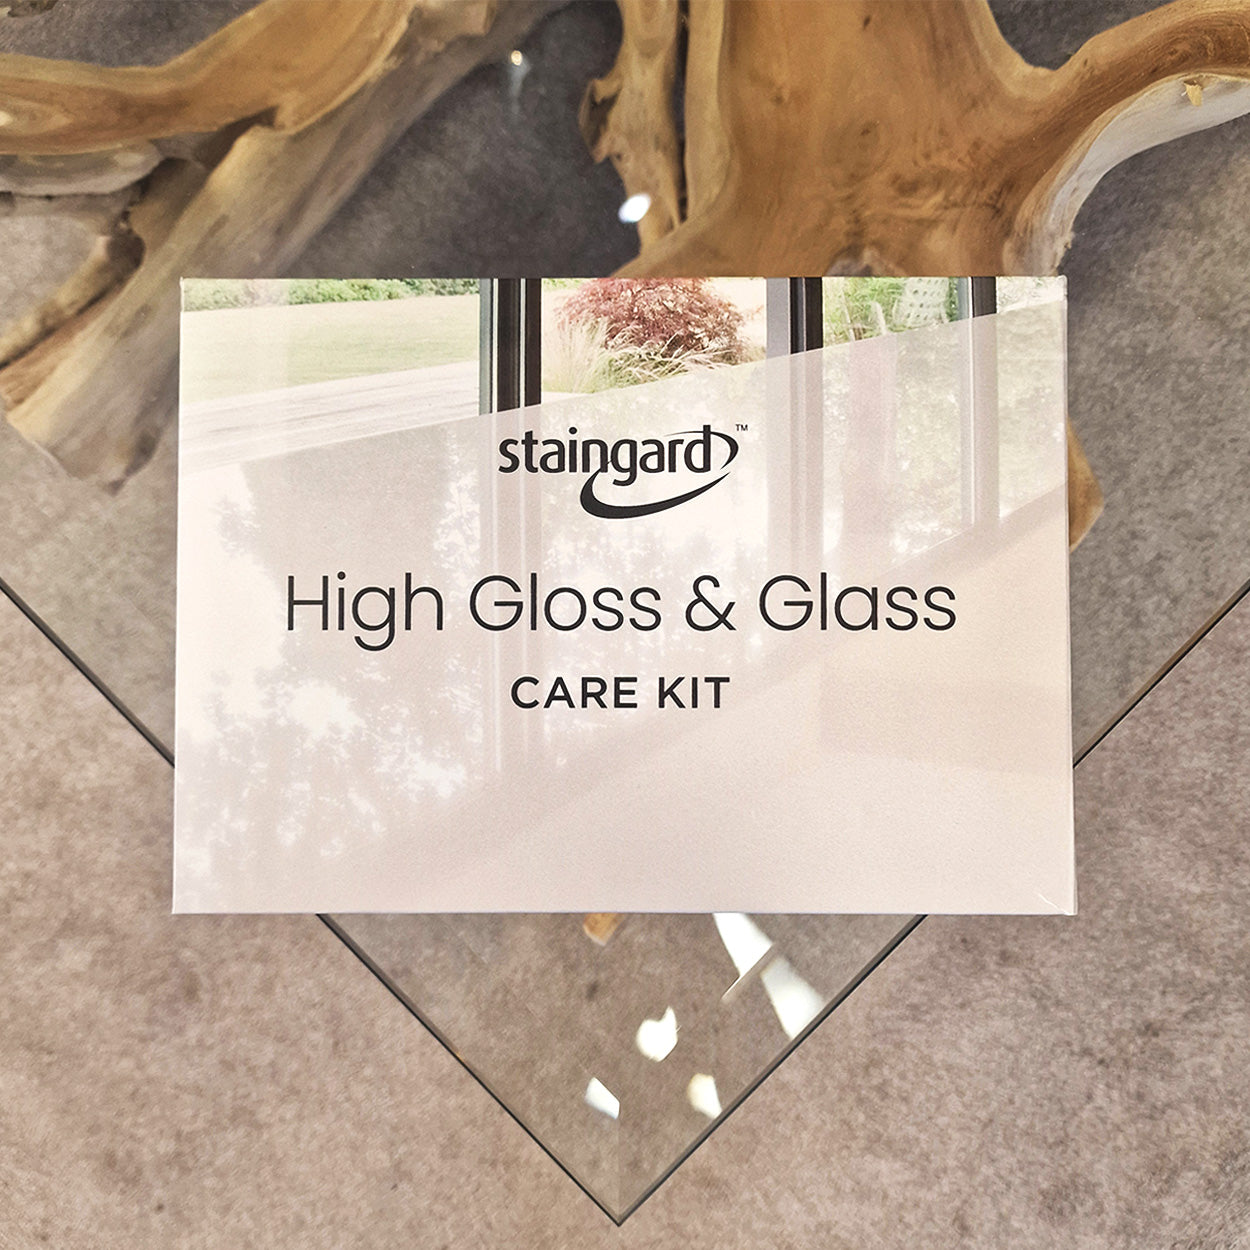 High Gloss & Glass Care Kit